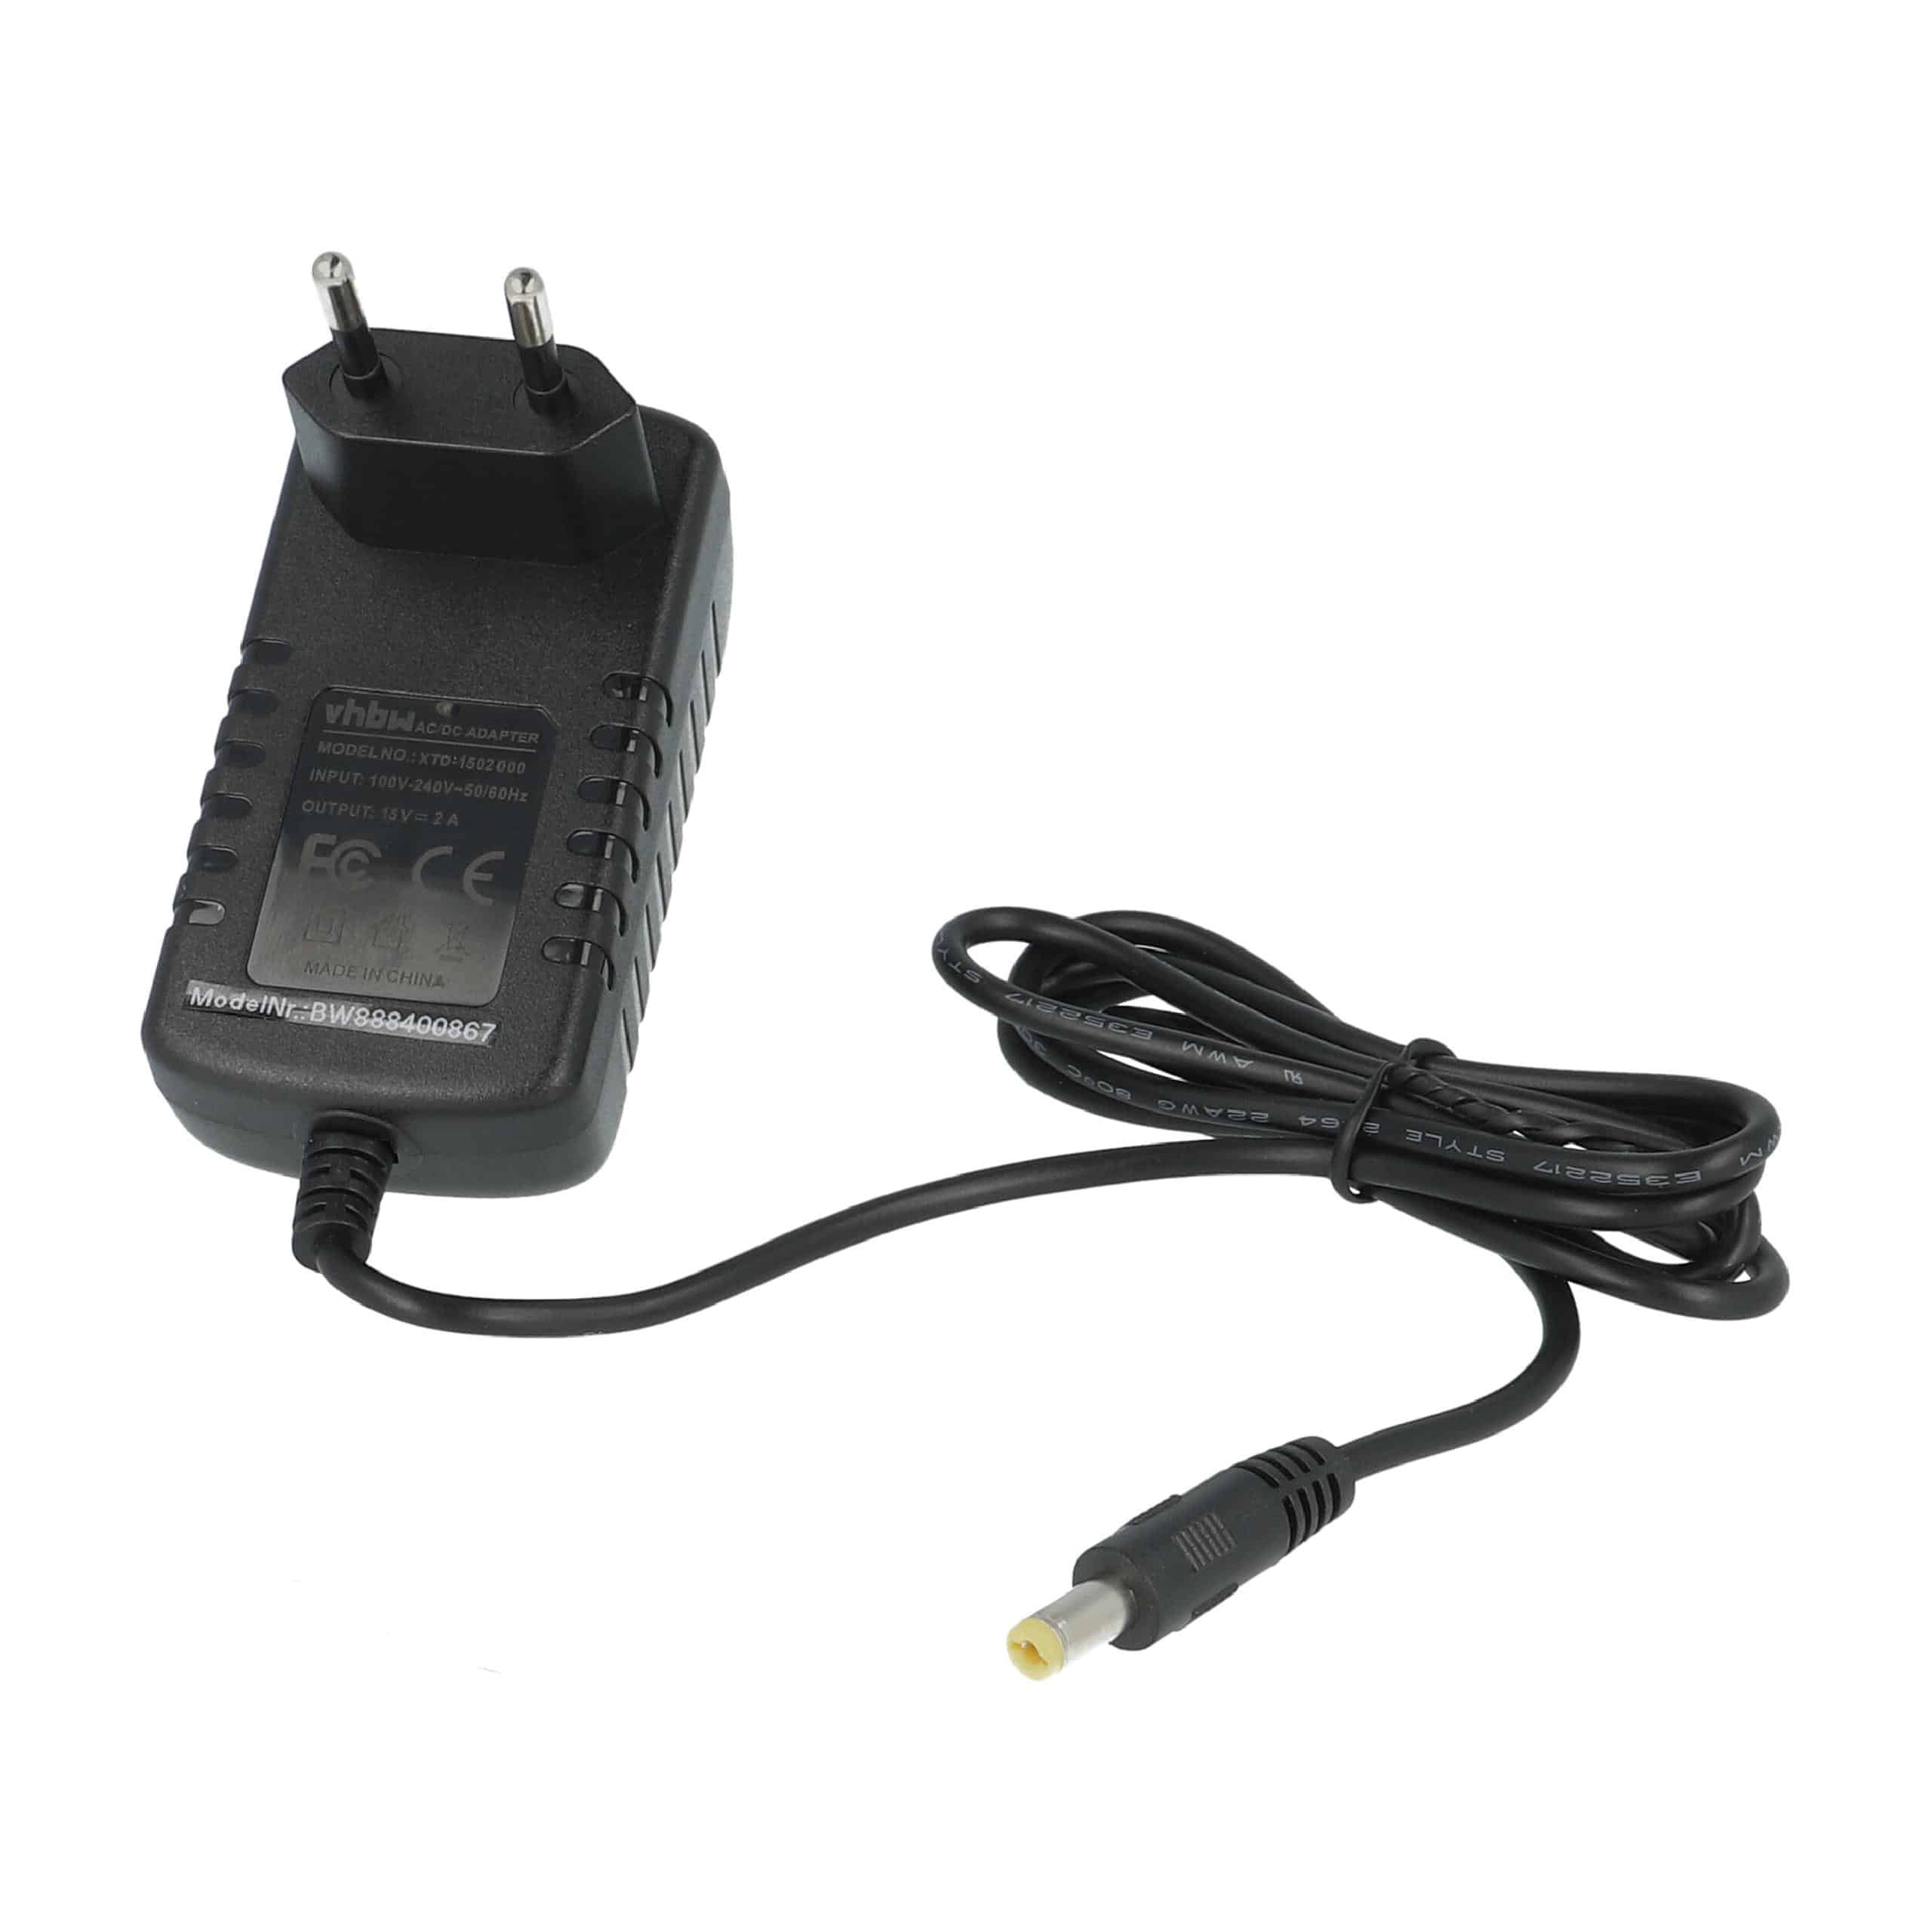 Mains Power Adapter suitable for GFP181DA-1512-1 PhilipsLoudspeaker etc., 15 V, 2.0 A